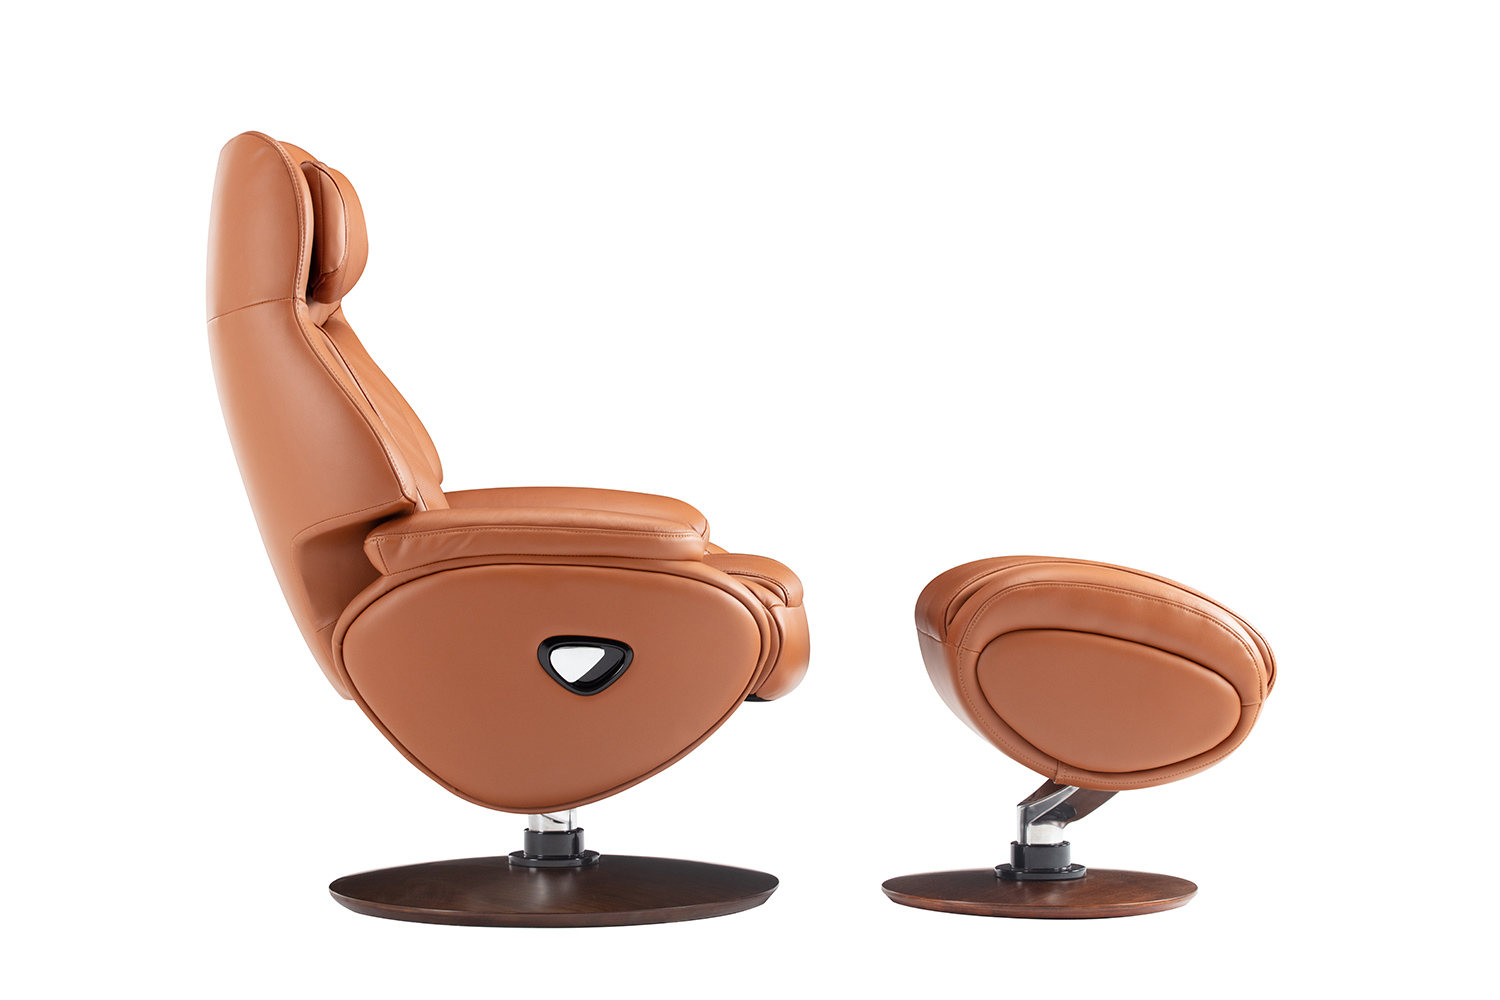 Barcalounger Marjon Pedestal Recliner Chair and Ottoman - Capri Tobacco/Leather match